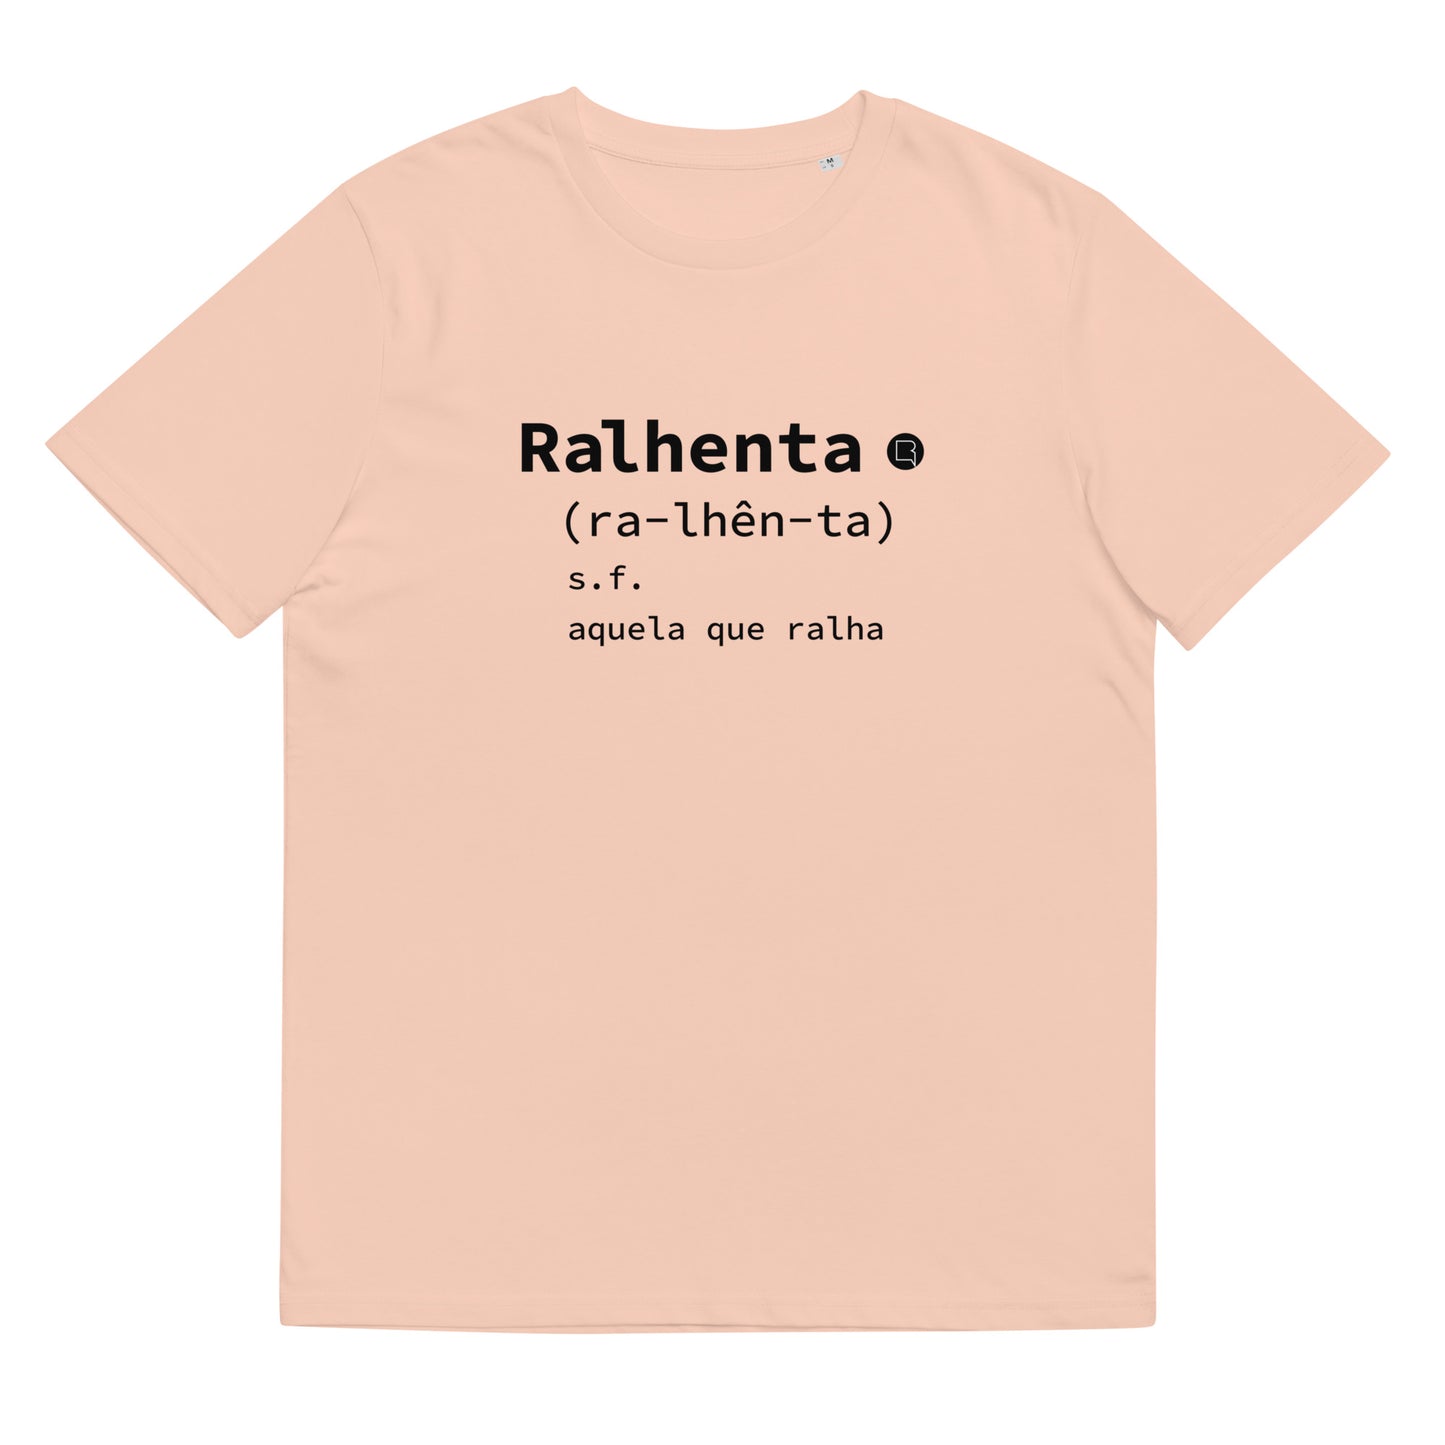 T-shirt Ralhenta Aquela que ralha